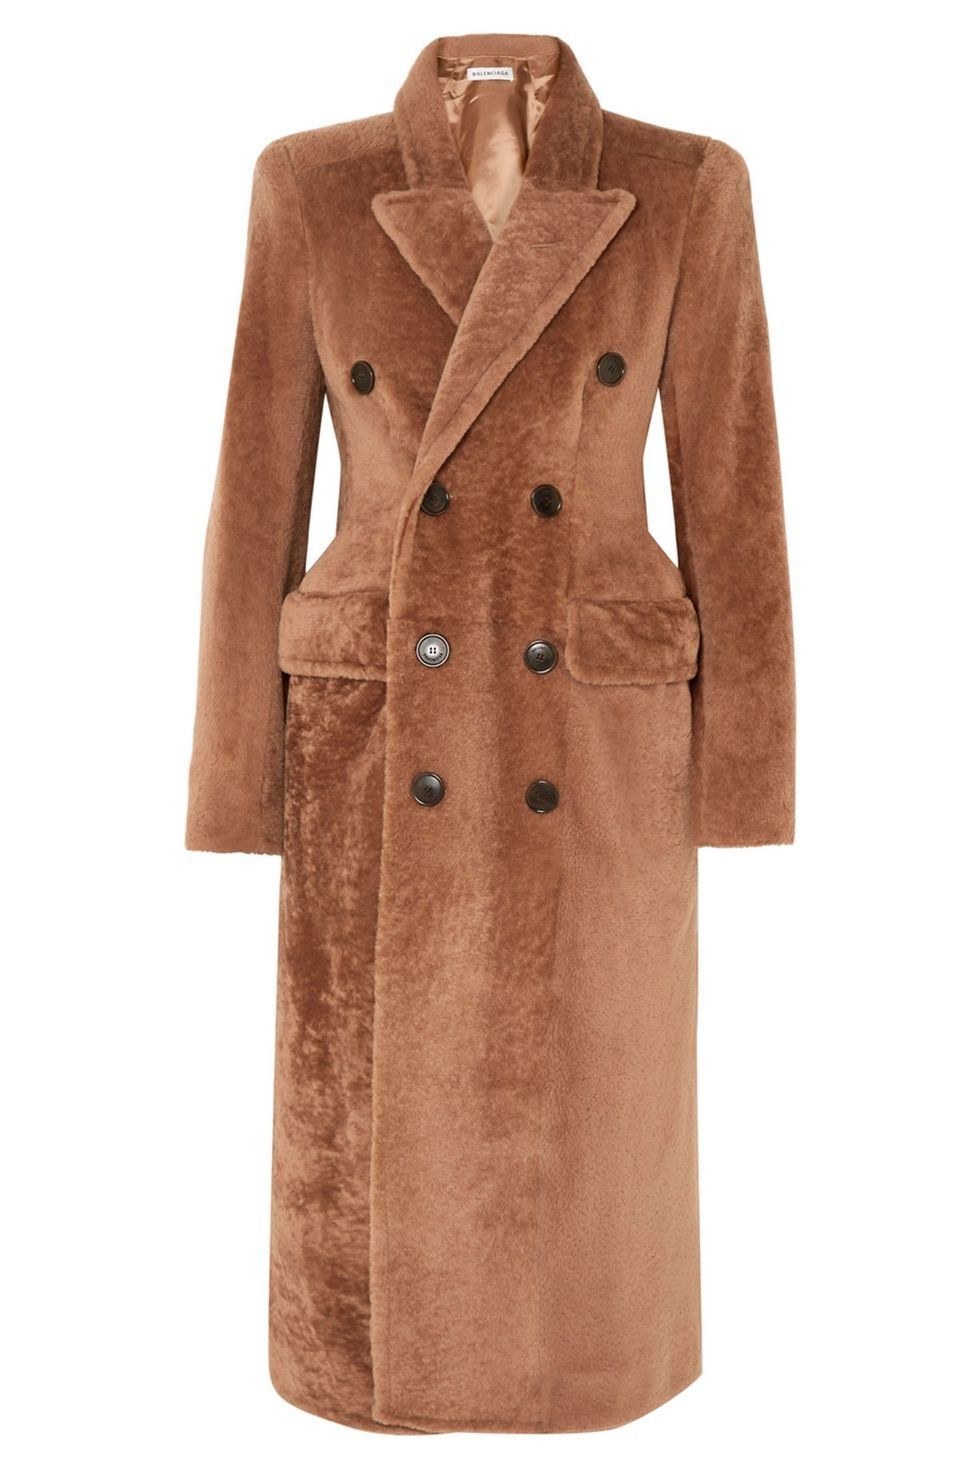 Clothing, Coat, Trench coat, Overcoat, Outerwear, Brown, Beige, Sleeve, Duster, Frock coat, 